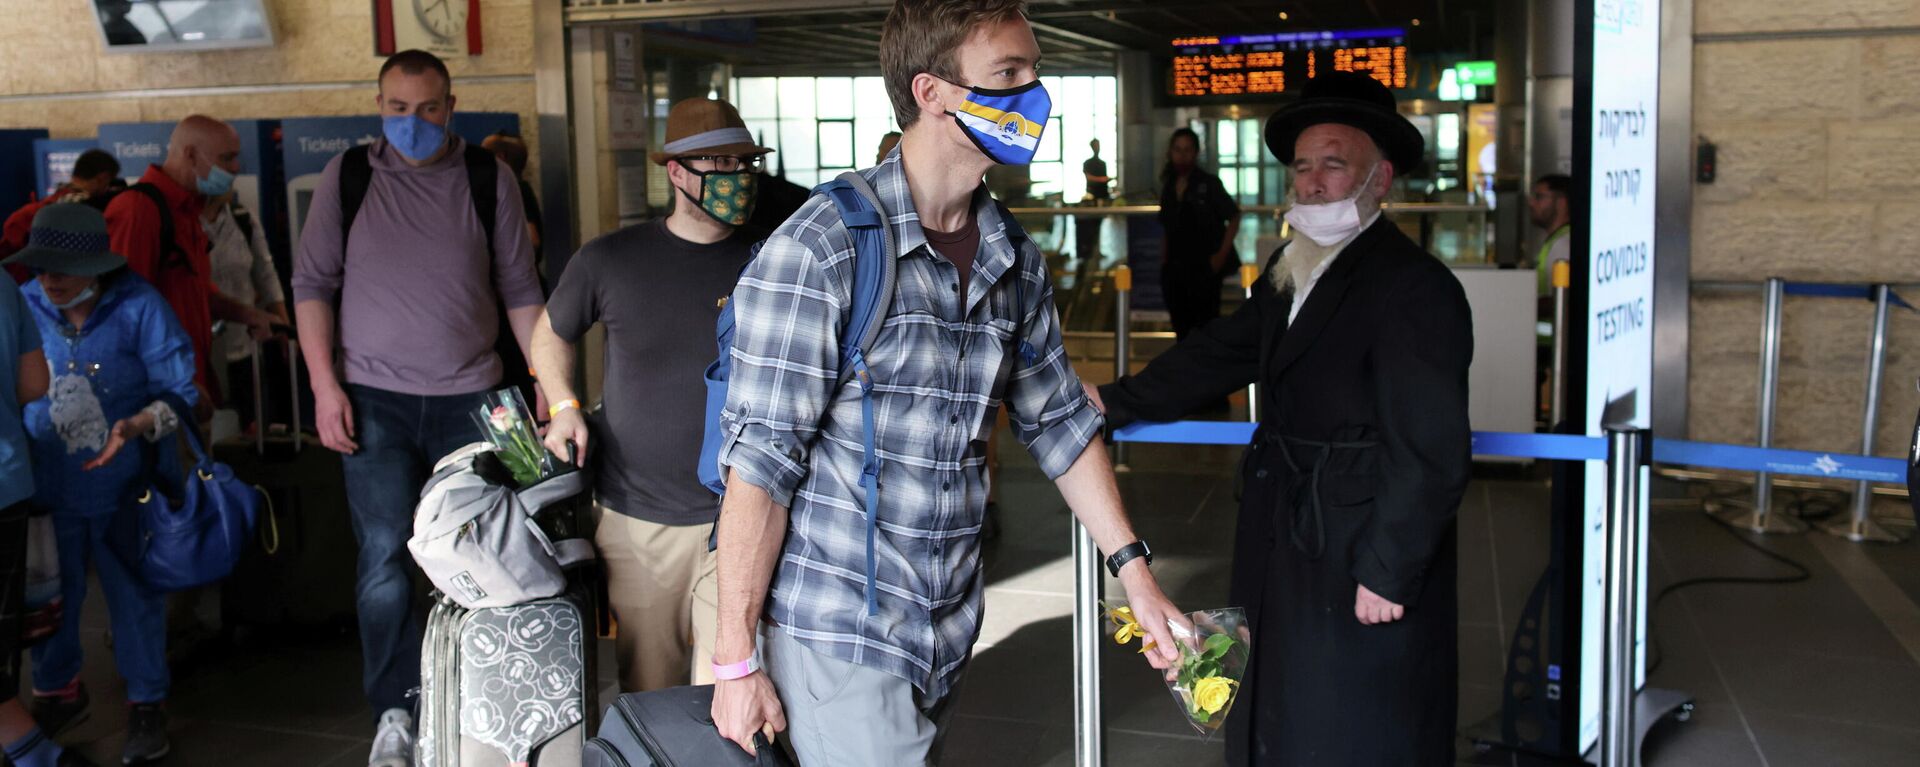 Tourists walk at the Ben Gurion International Airport after entering Israel by plane, as coronavirus disease (COVID-19) restrictions ease, in Lod, near Tel Aviv, Israel, May 27, 2021 - Sputnik International, 1920, 08.11.2021